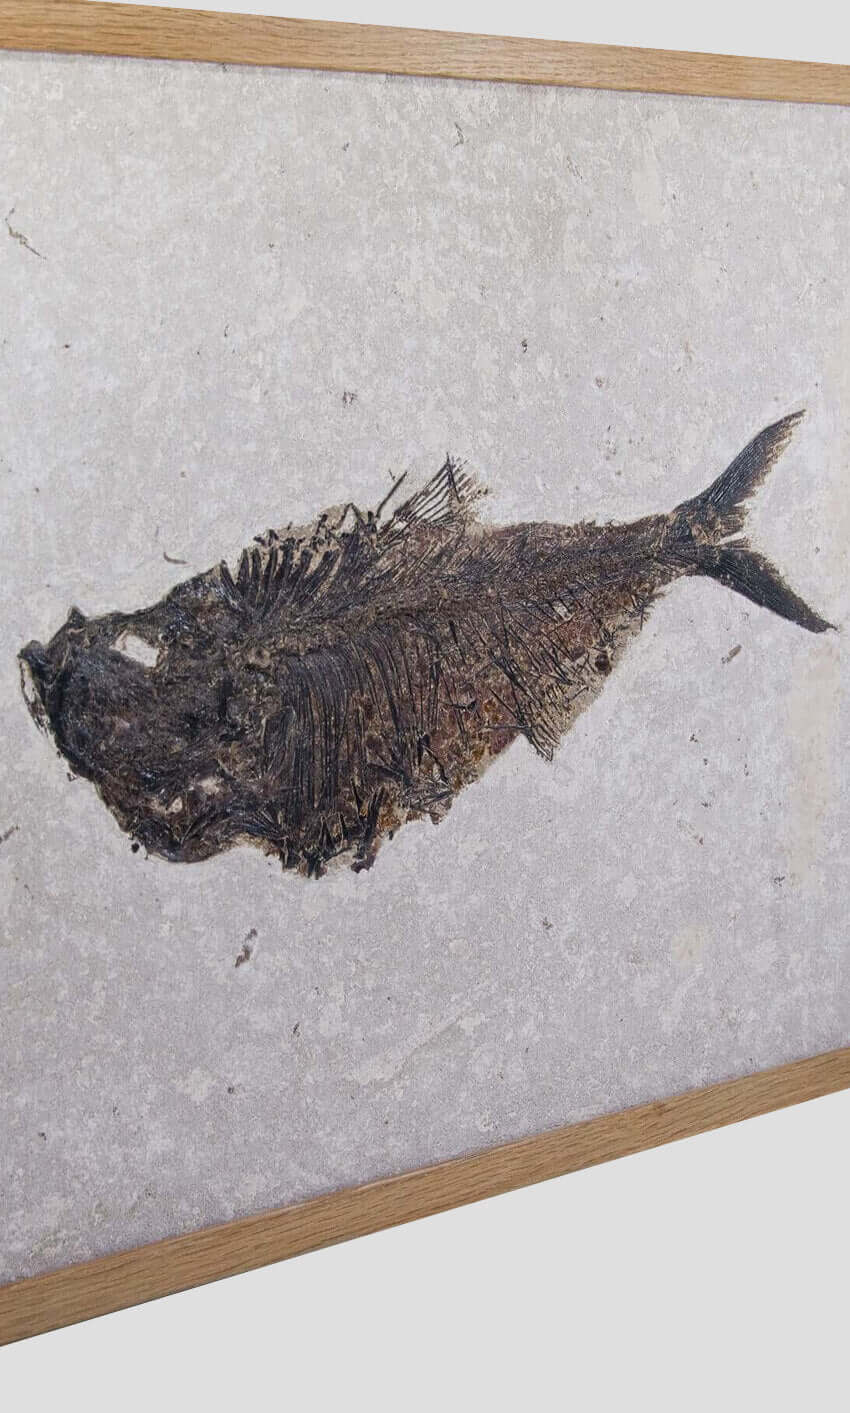 Framed Diplomystus Dentatus Fish 695mm